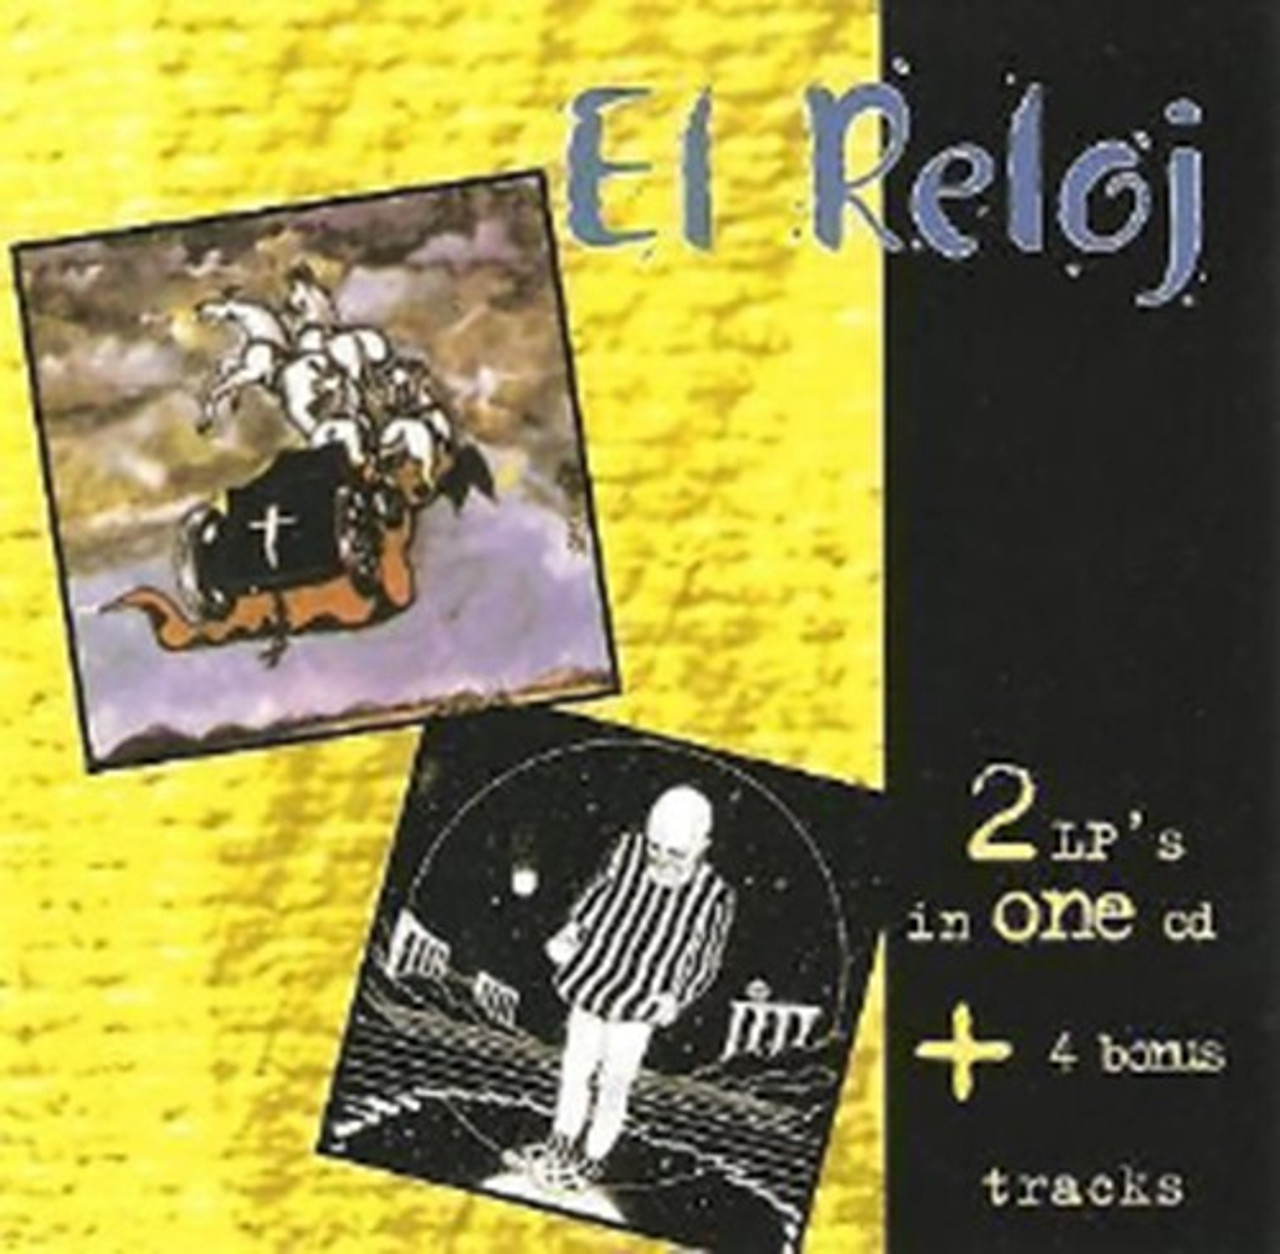 EL RELOJ - 2 LPs on ONE CD plus bonus tracks (70s Argentina premiere hard  rock ) CD - Bomp Records